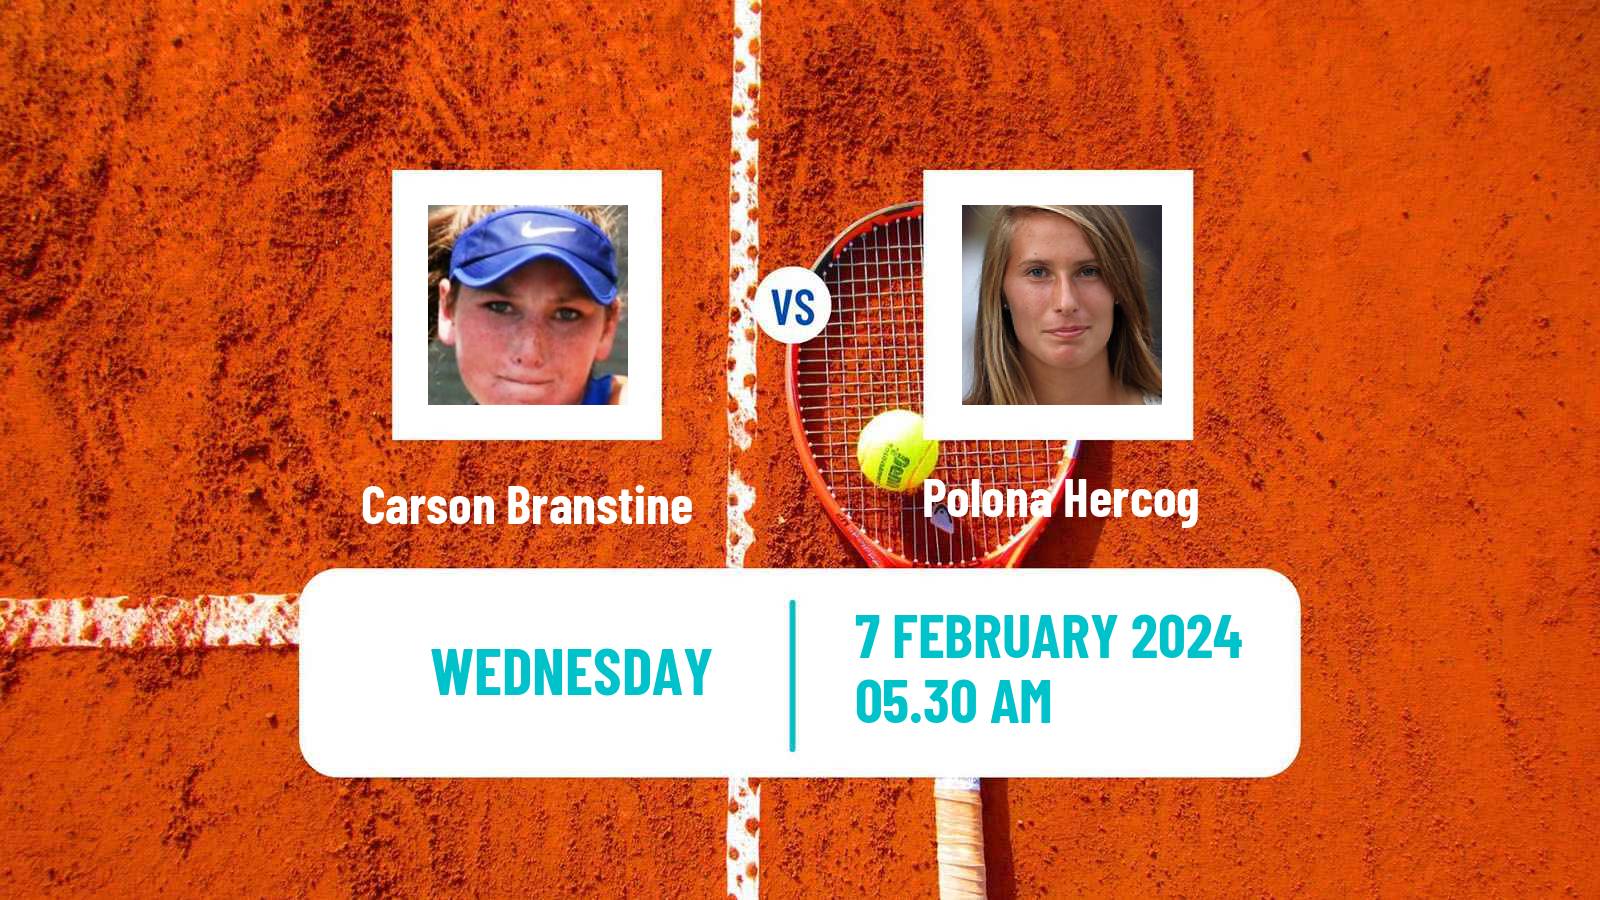 Tennis ITF W35 Antalya 2 Women Carson Branstine - Polona Hercog